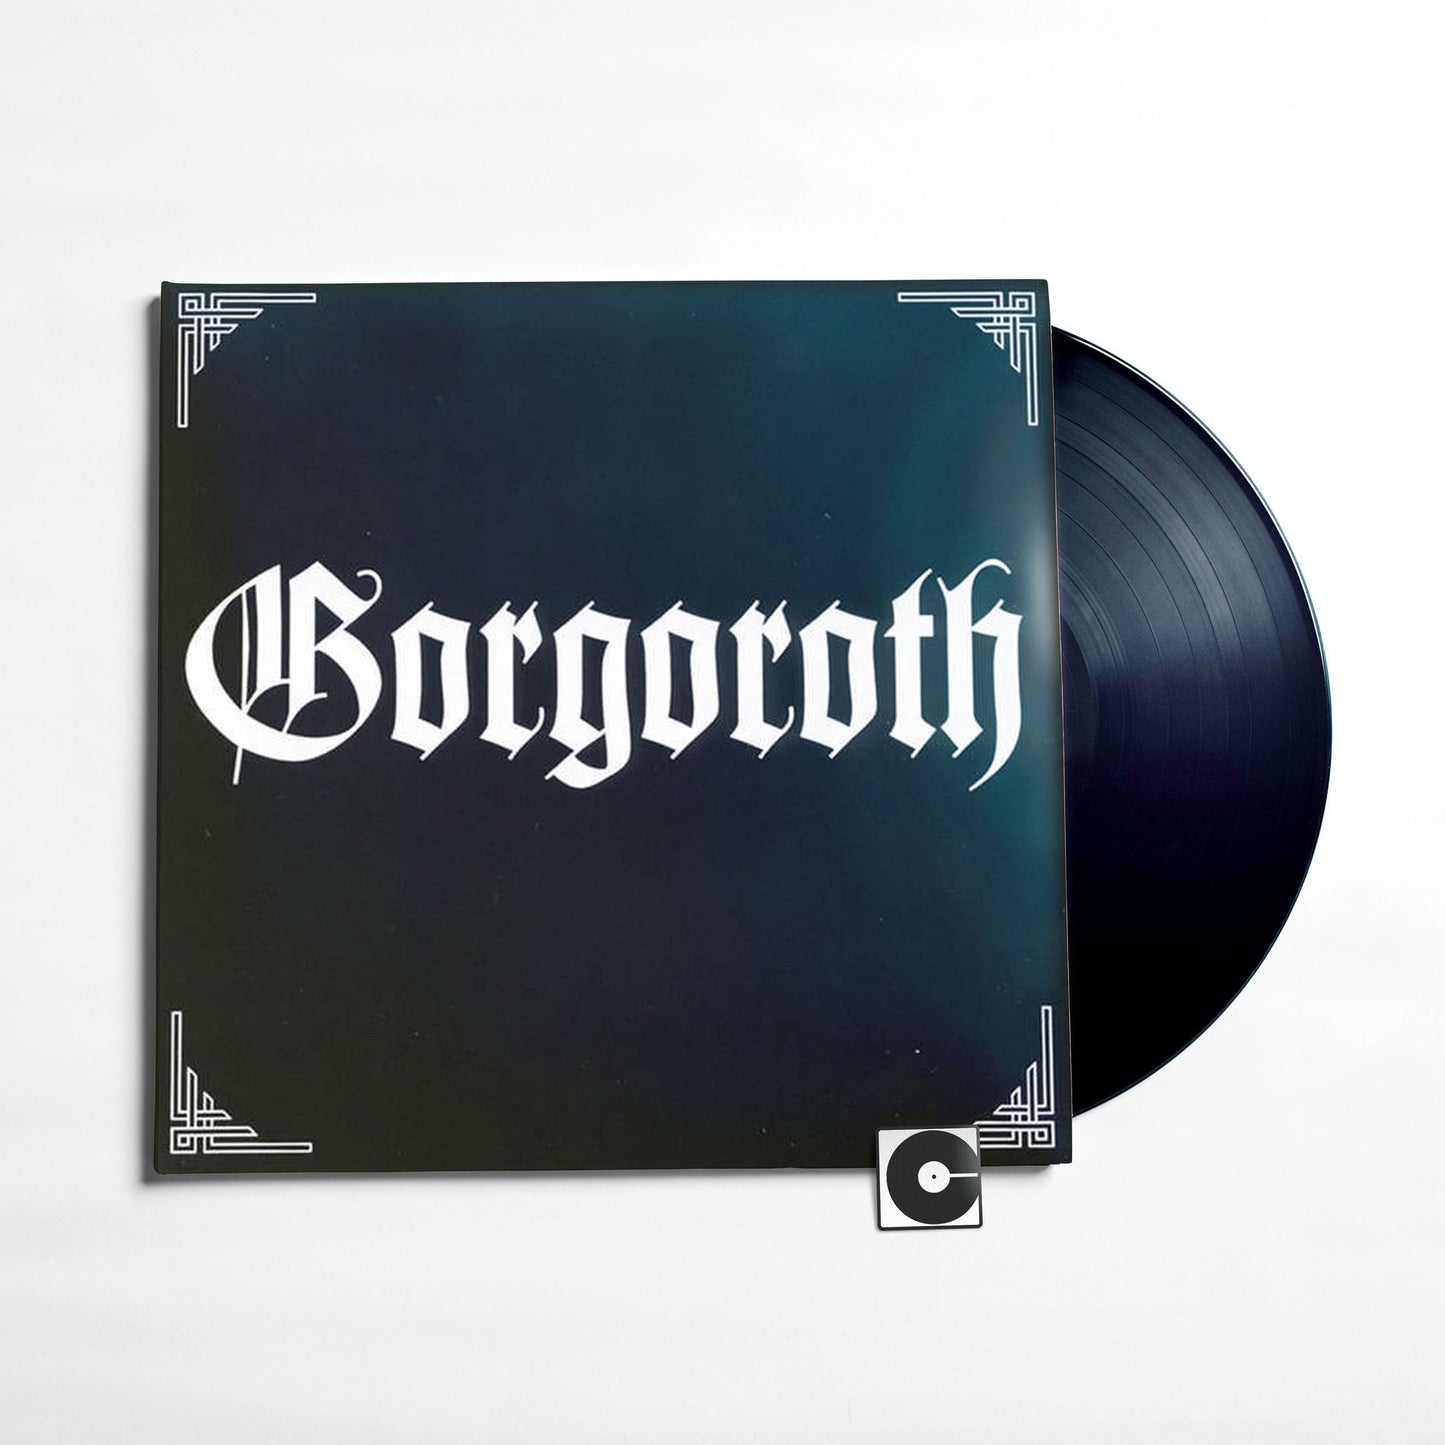 Gorgoroth - "Pentagram"